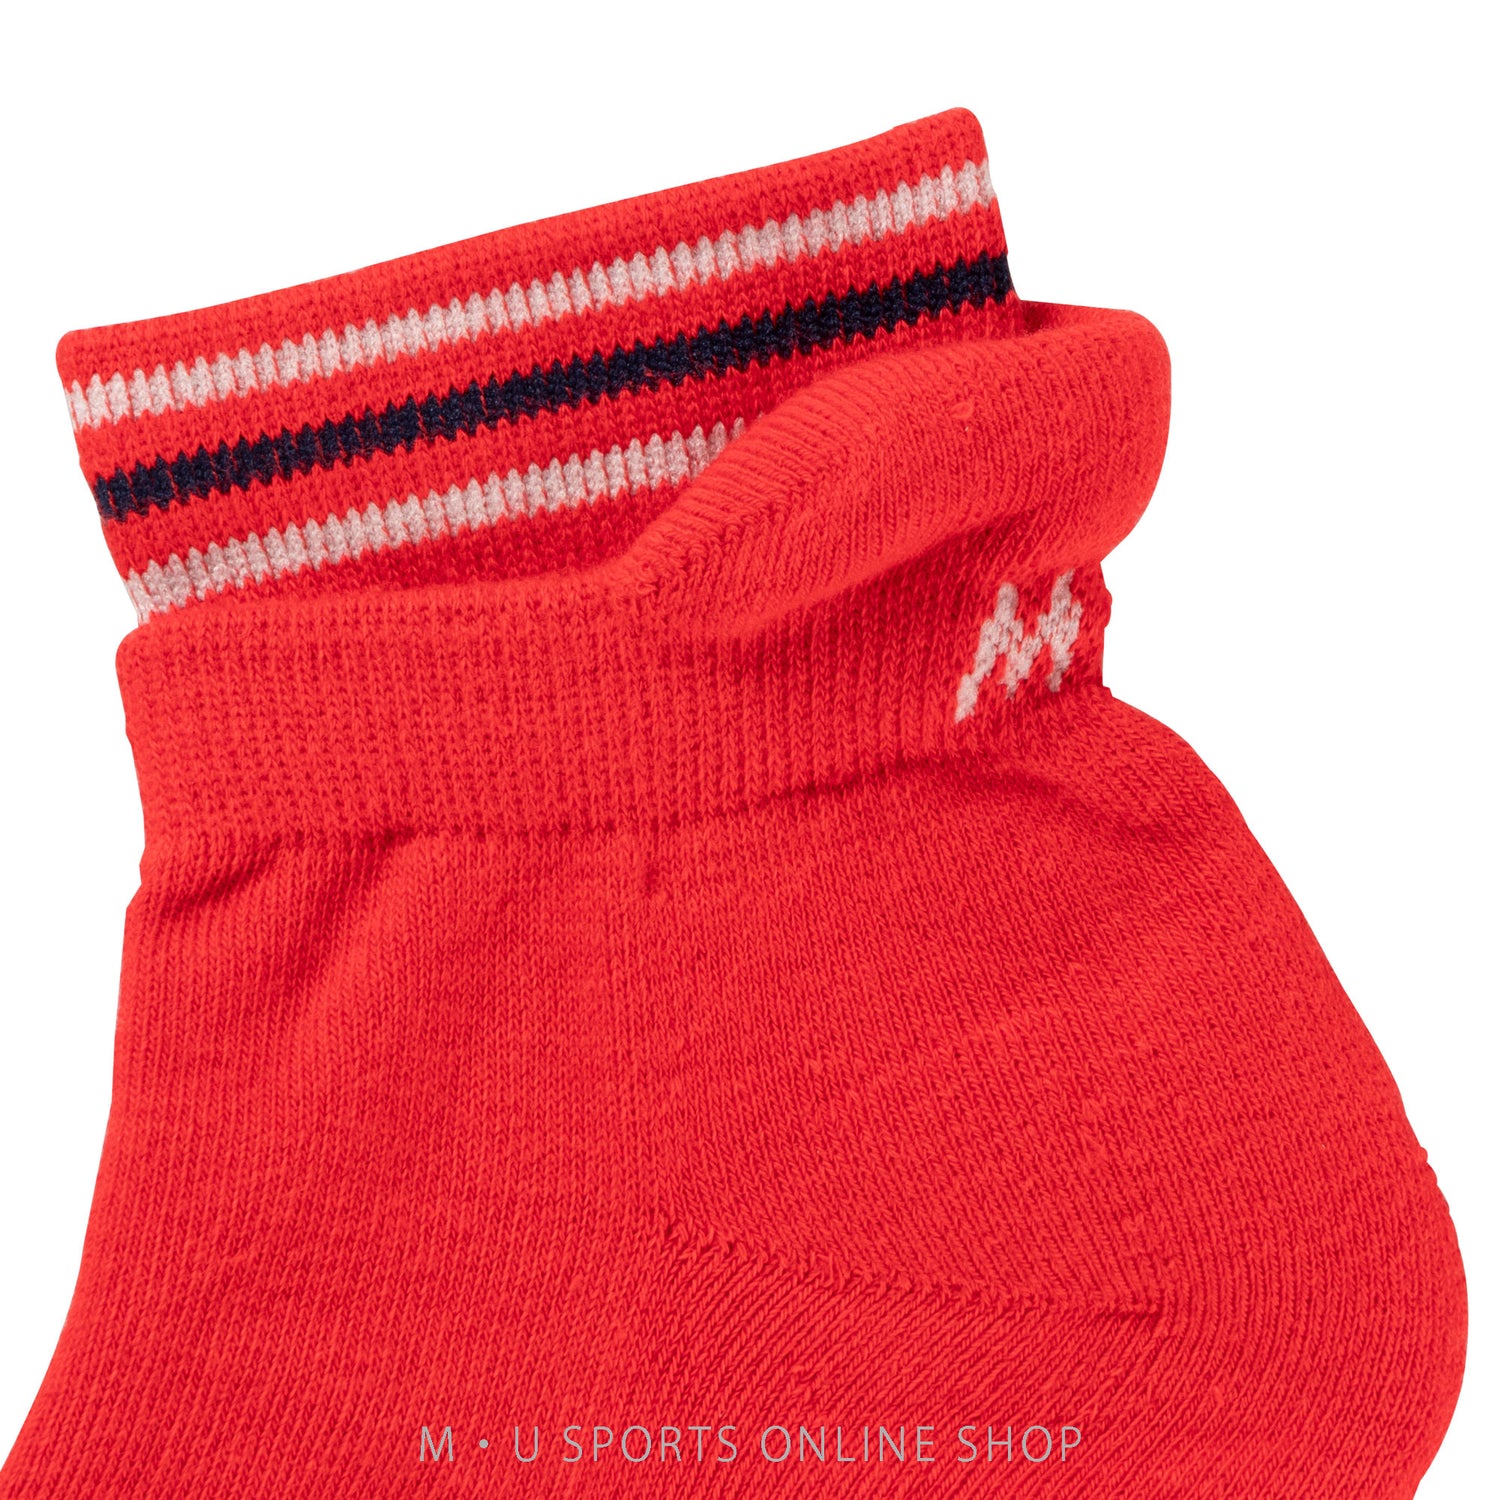 Short socks (701J6752)